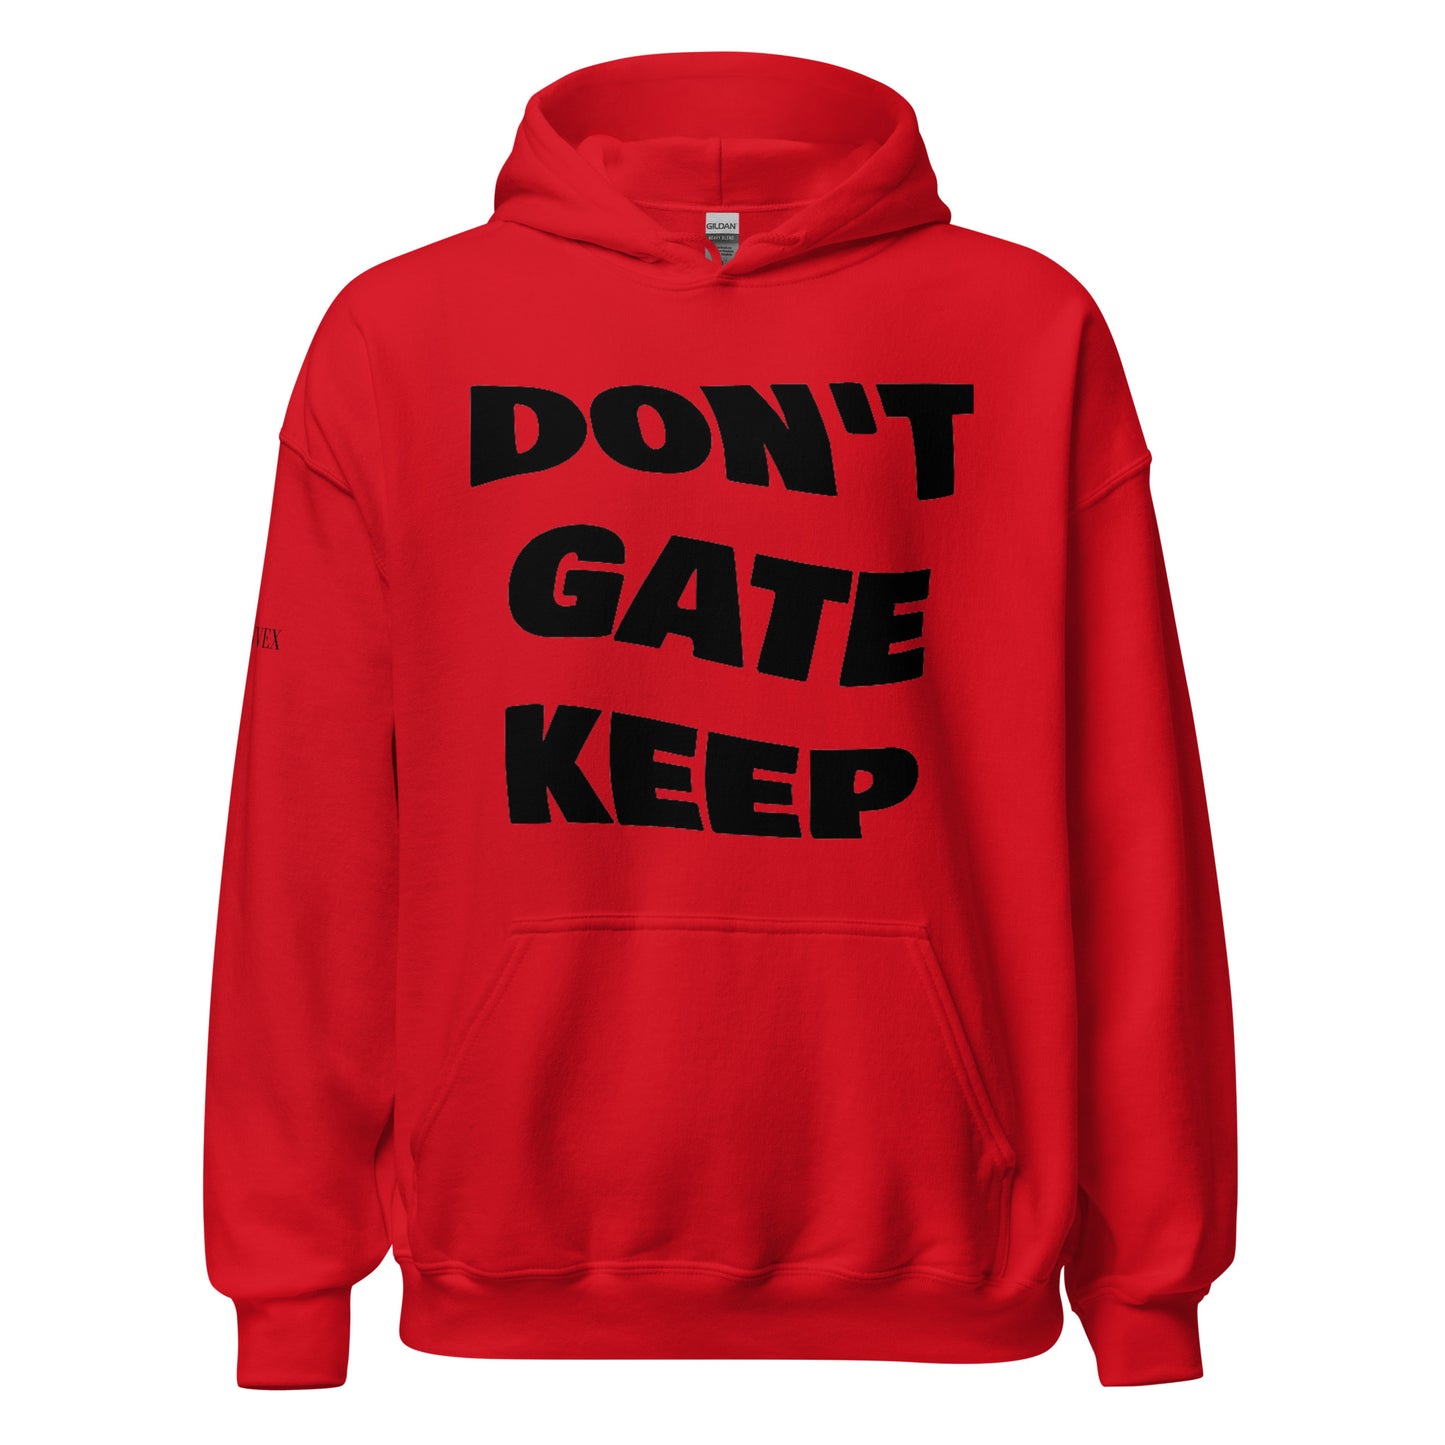 "DONT GATE KEEP' Original unisex hoodie